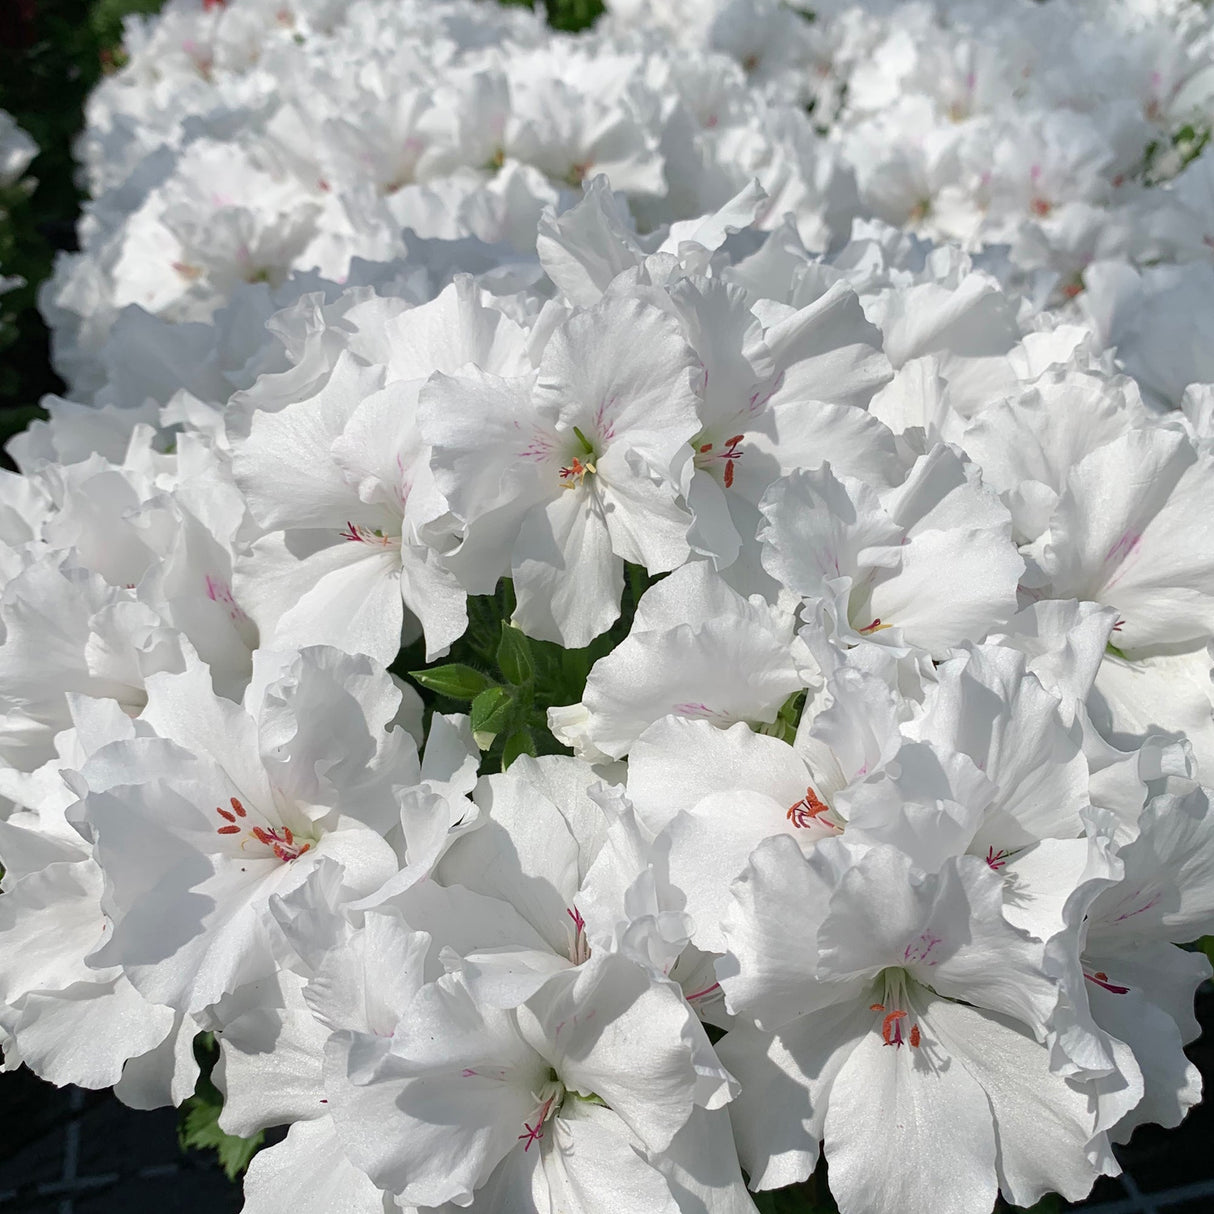 Muscata Candy Flowers White - VERDENA-10-15 cm inaltime livrate in ghiveci de 1 L